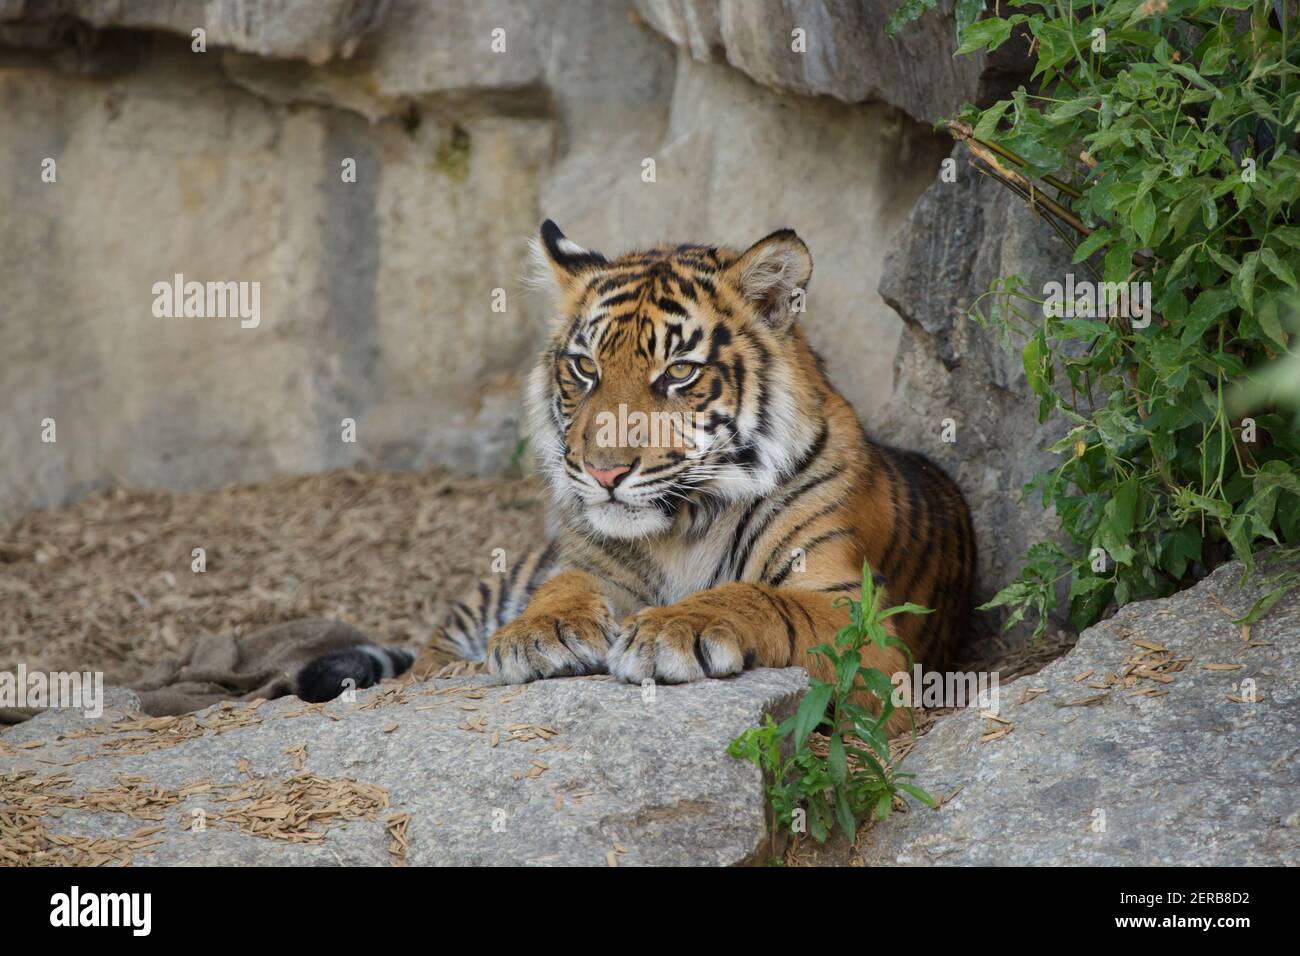 Sumatran tiger cub (Panthera tigris sumatrae) à Tierpark Berlin, Allemagne. Banque D'Images